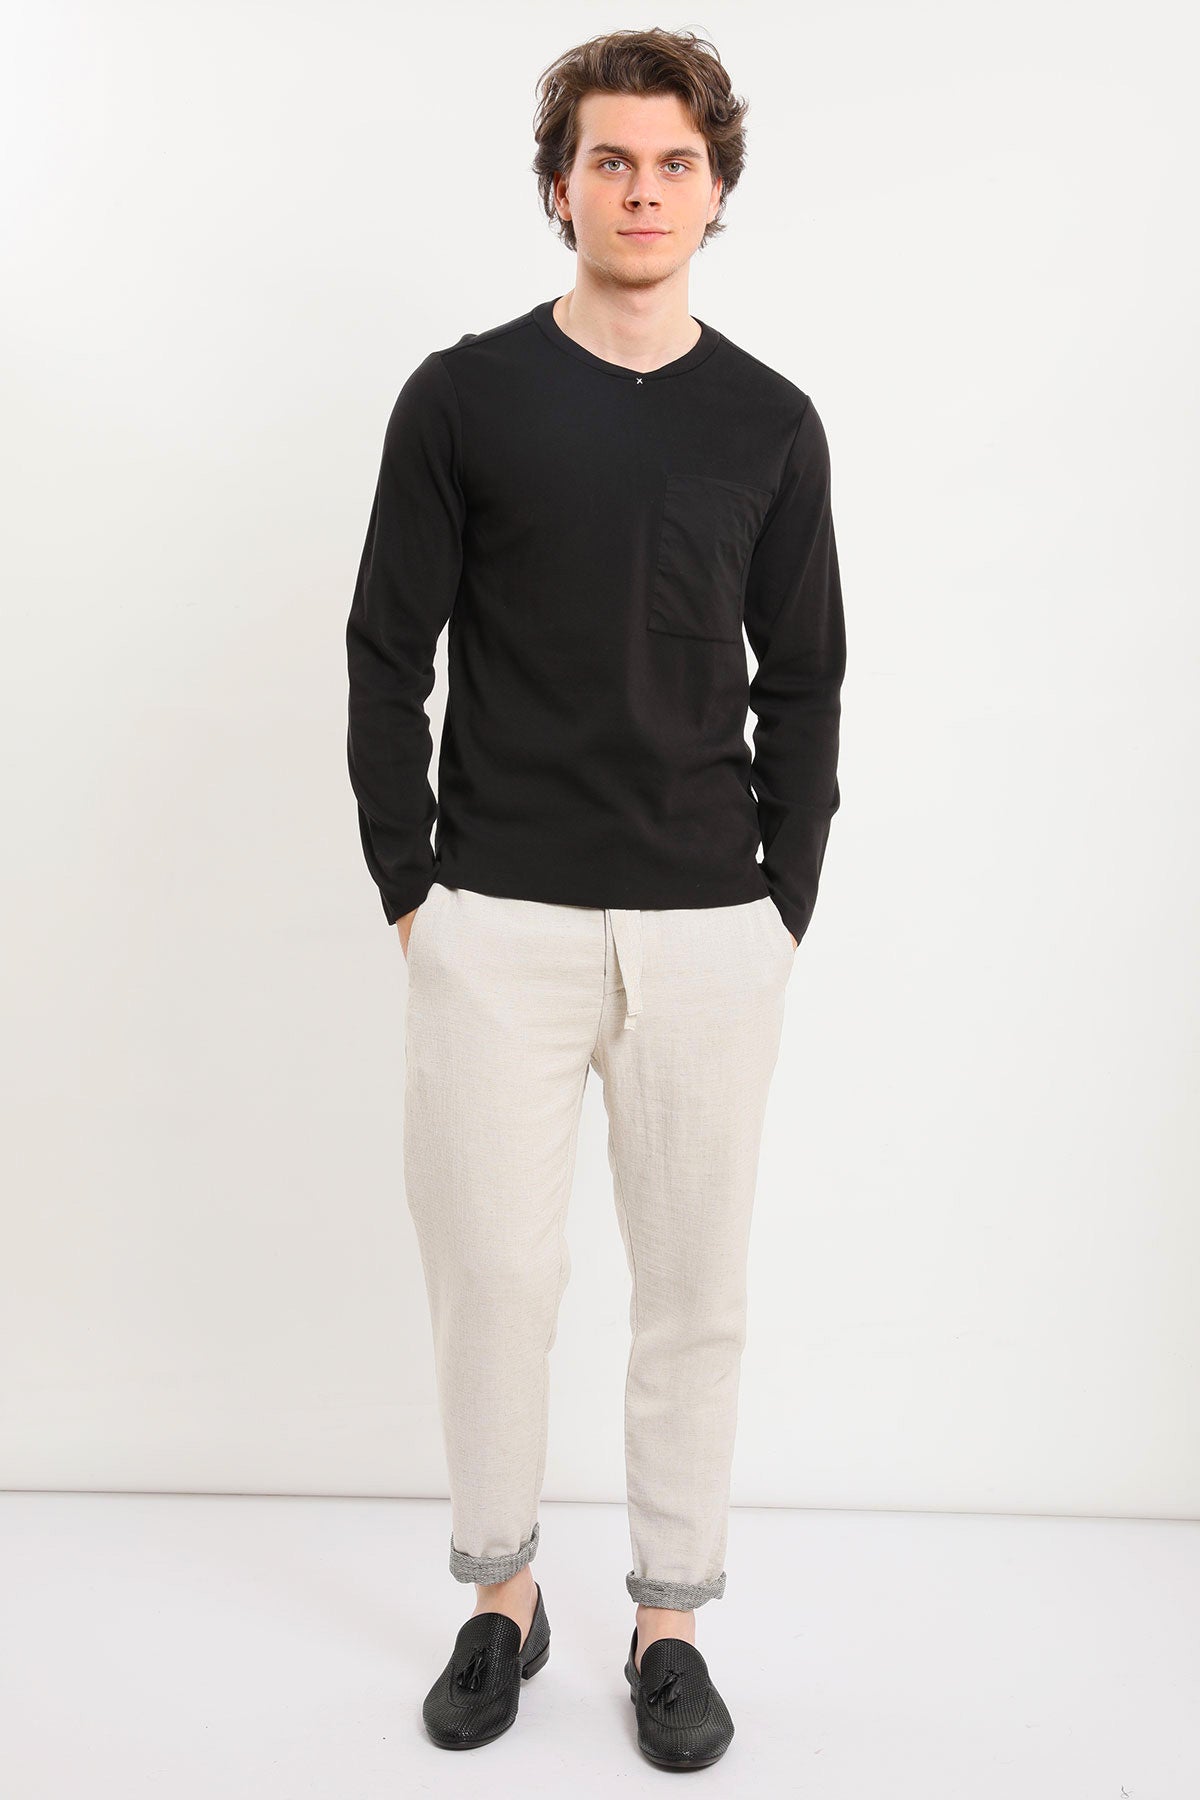 Transit Sweatshirt-Libas Trendy Fashion Store